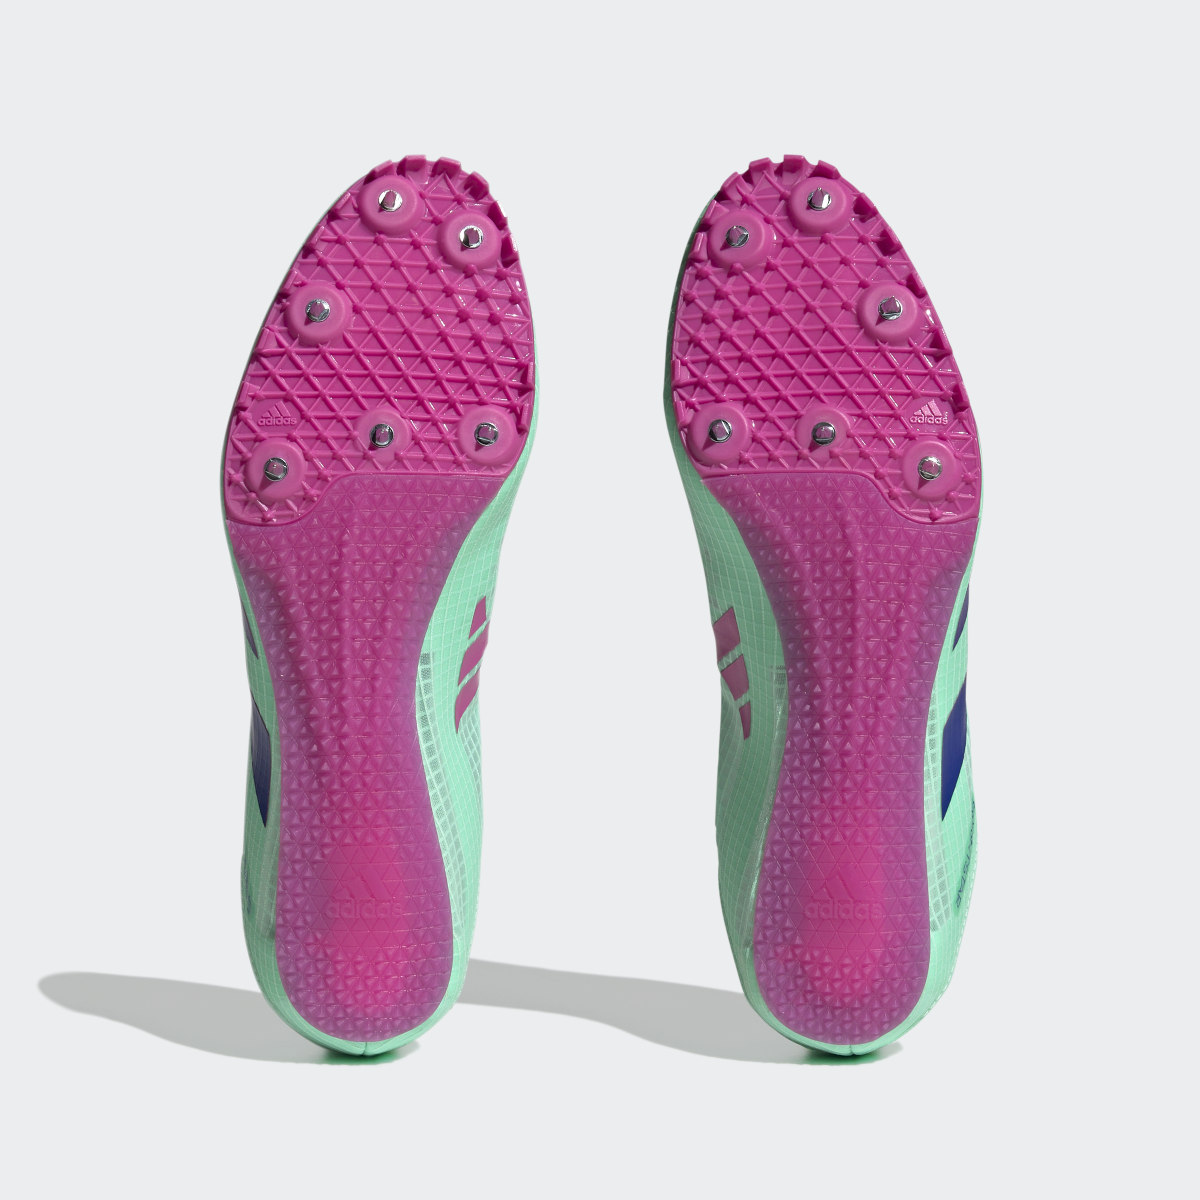 Adidas Adizero Sprintstar Running Shoes. 4